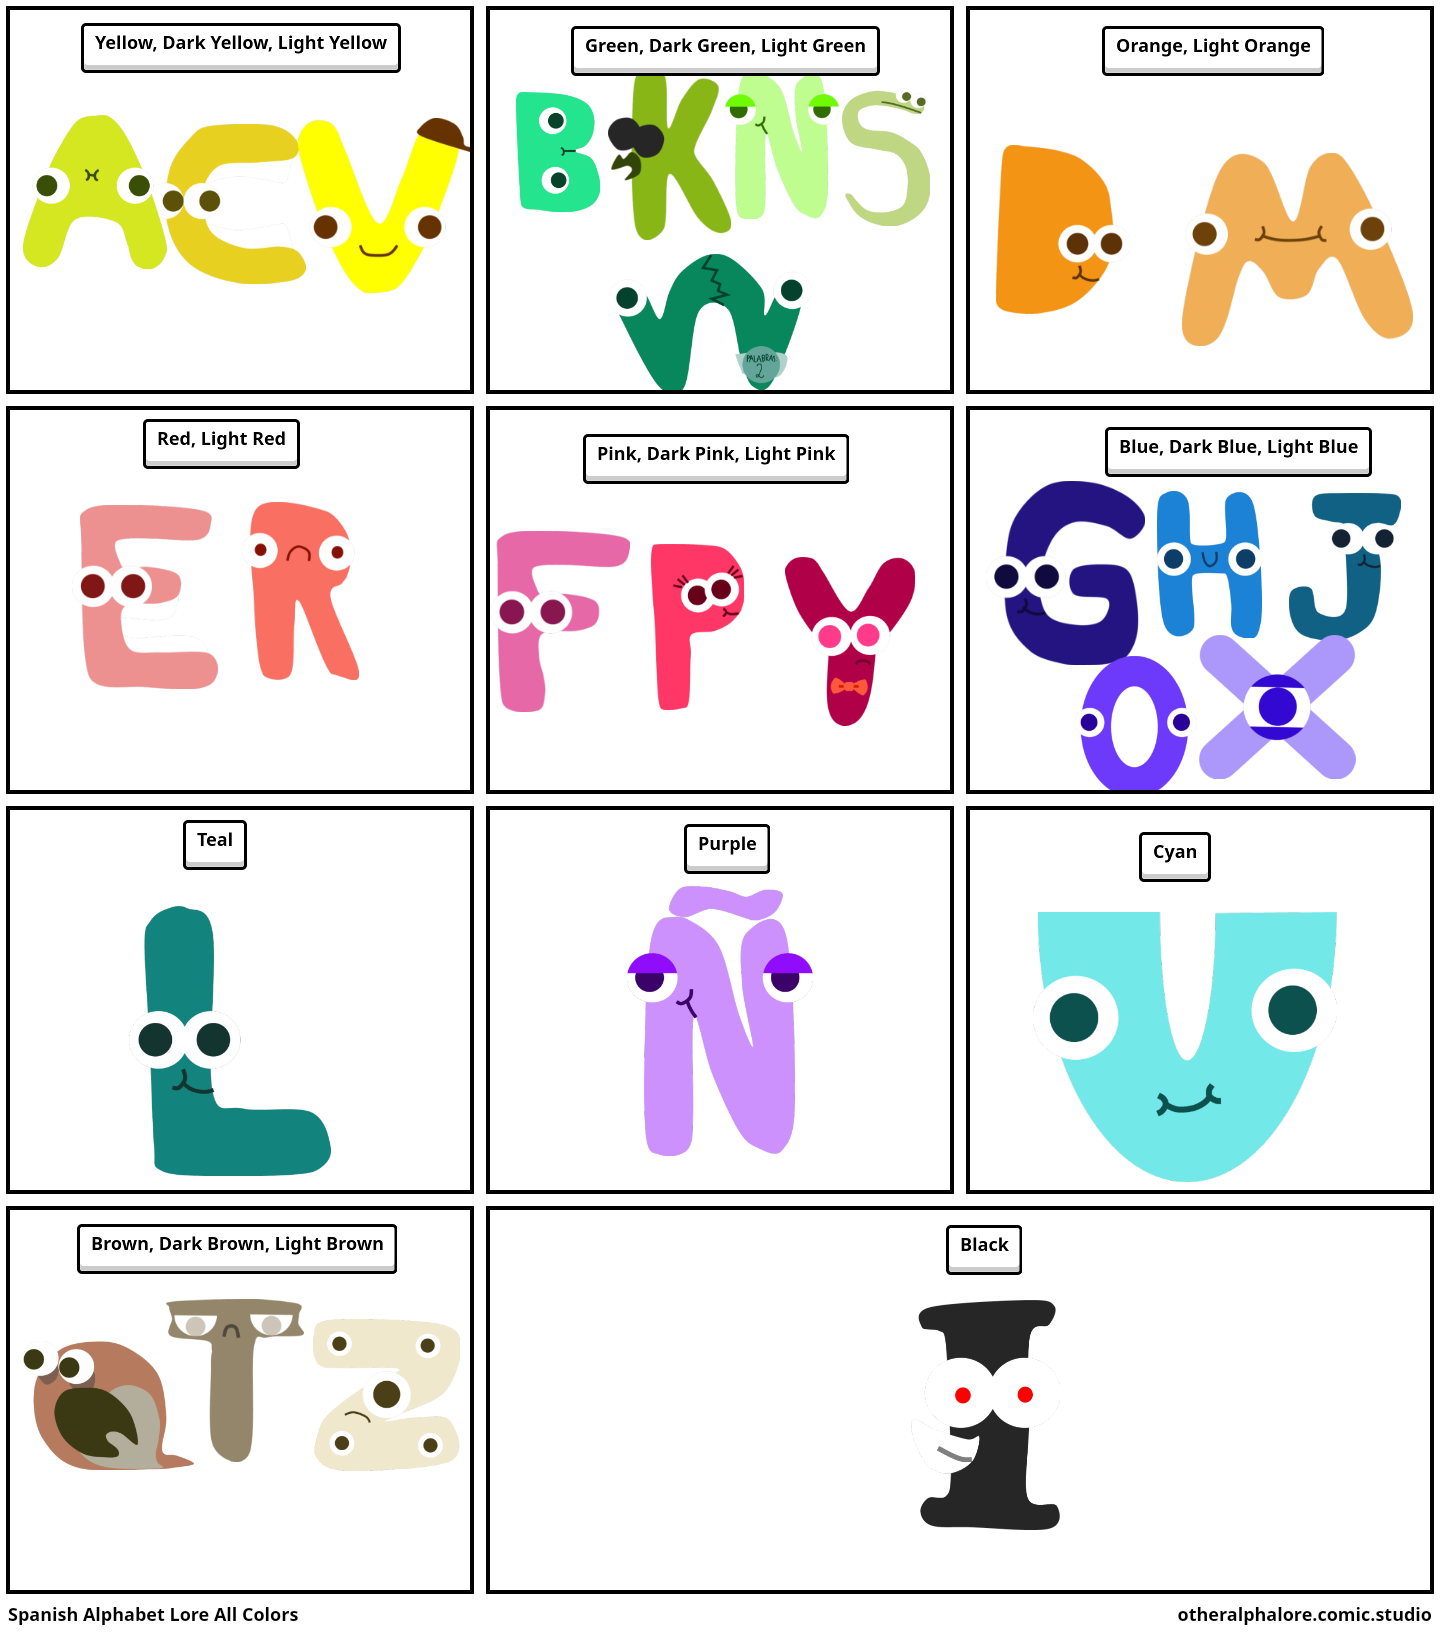 Spanish Alphabet Lore All Colors - Comic Studio